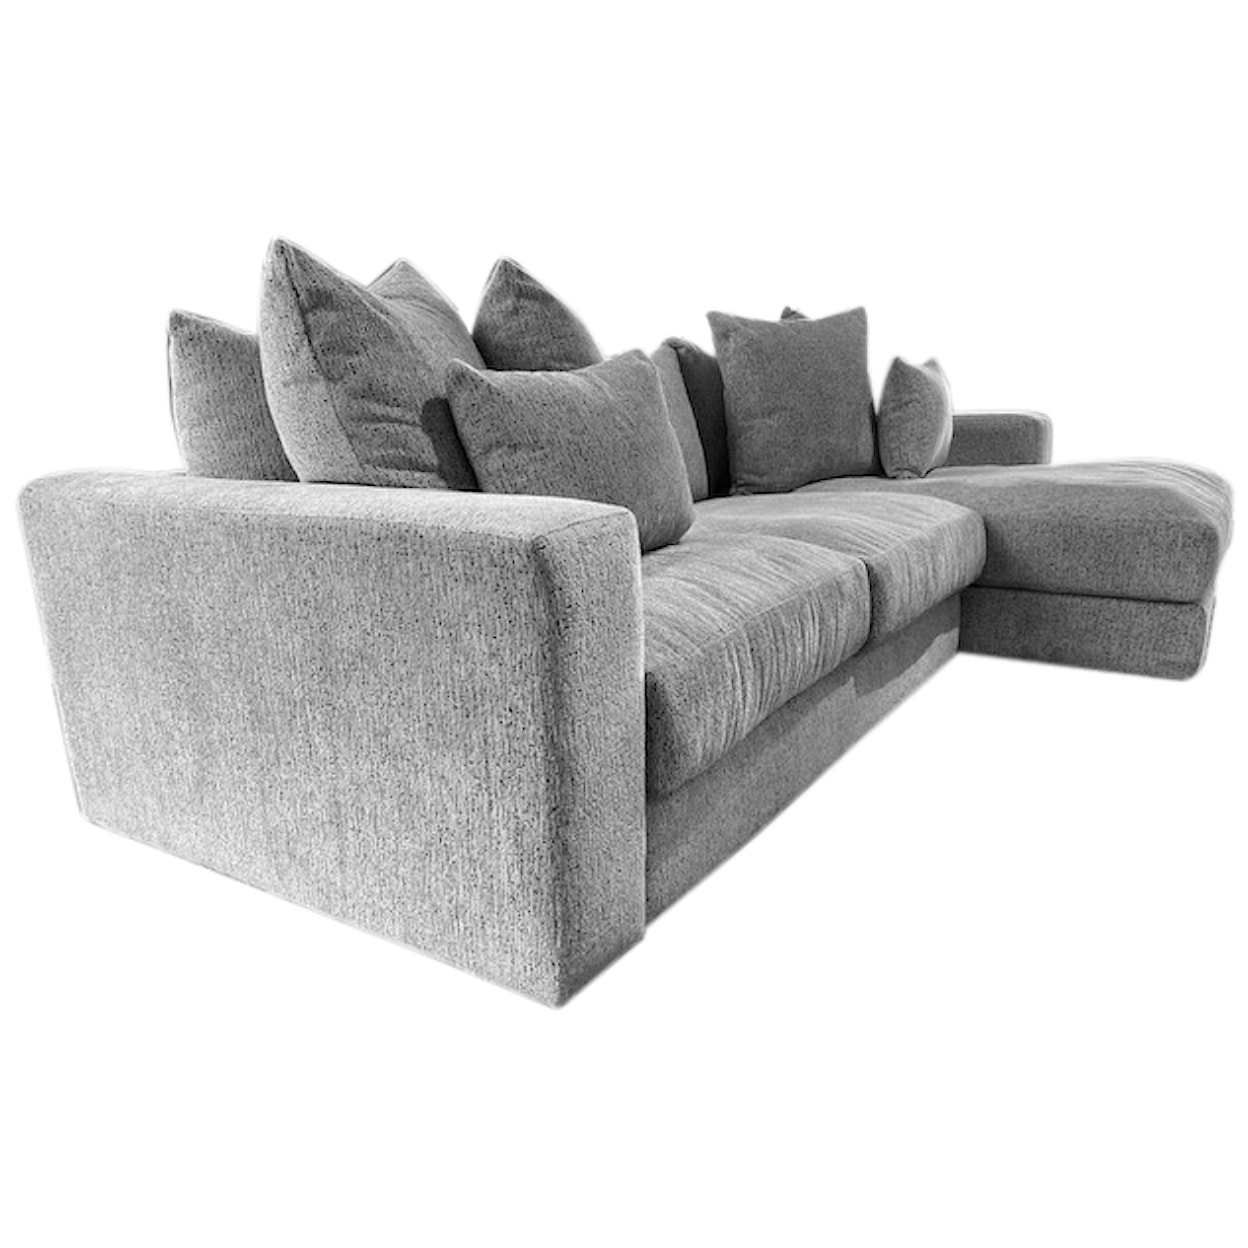 Dfs corner sofa for sale - Stuff for Sale